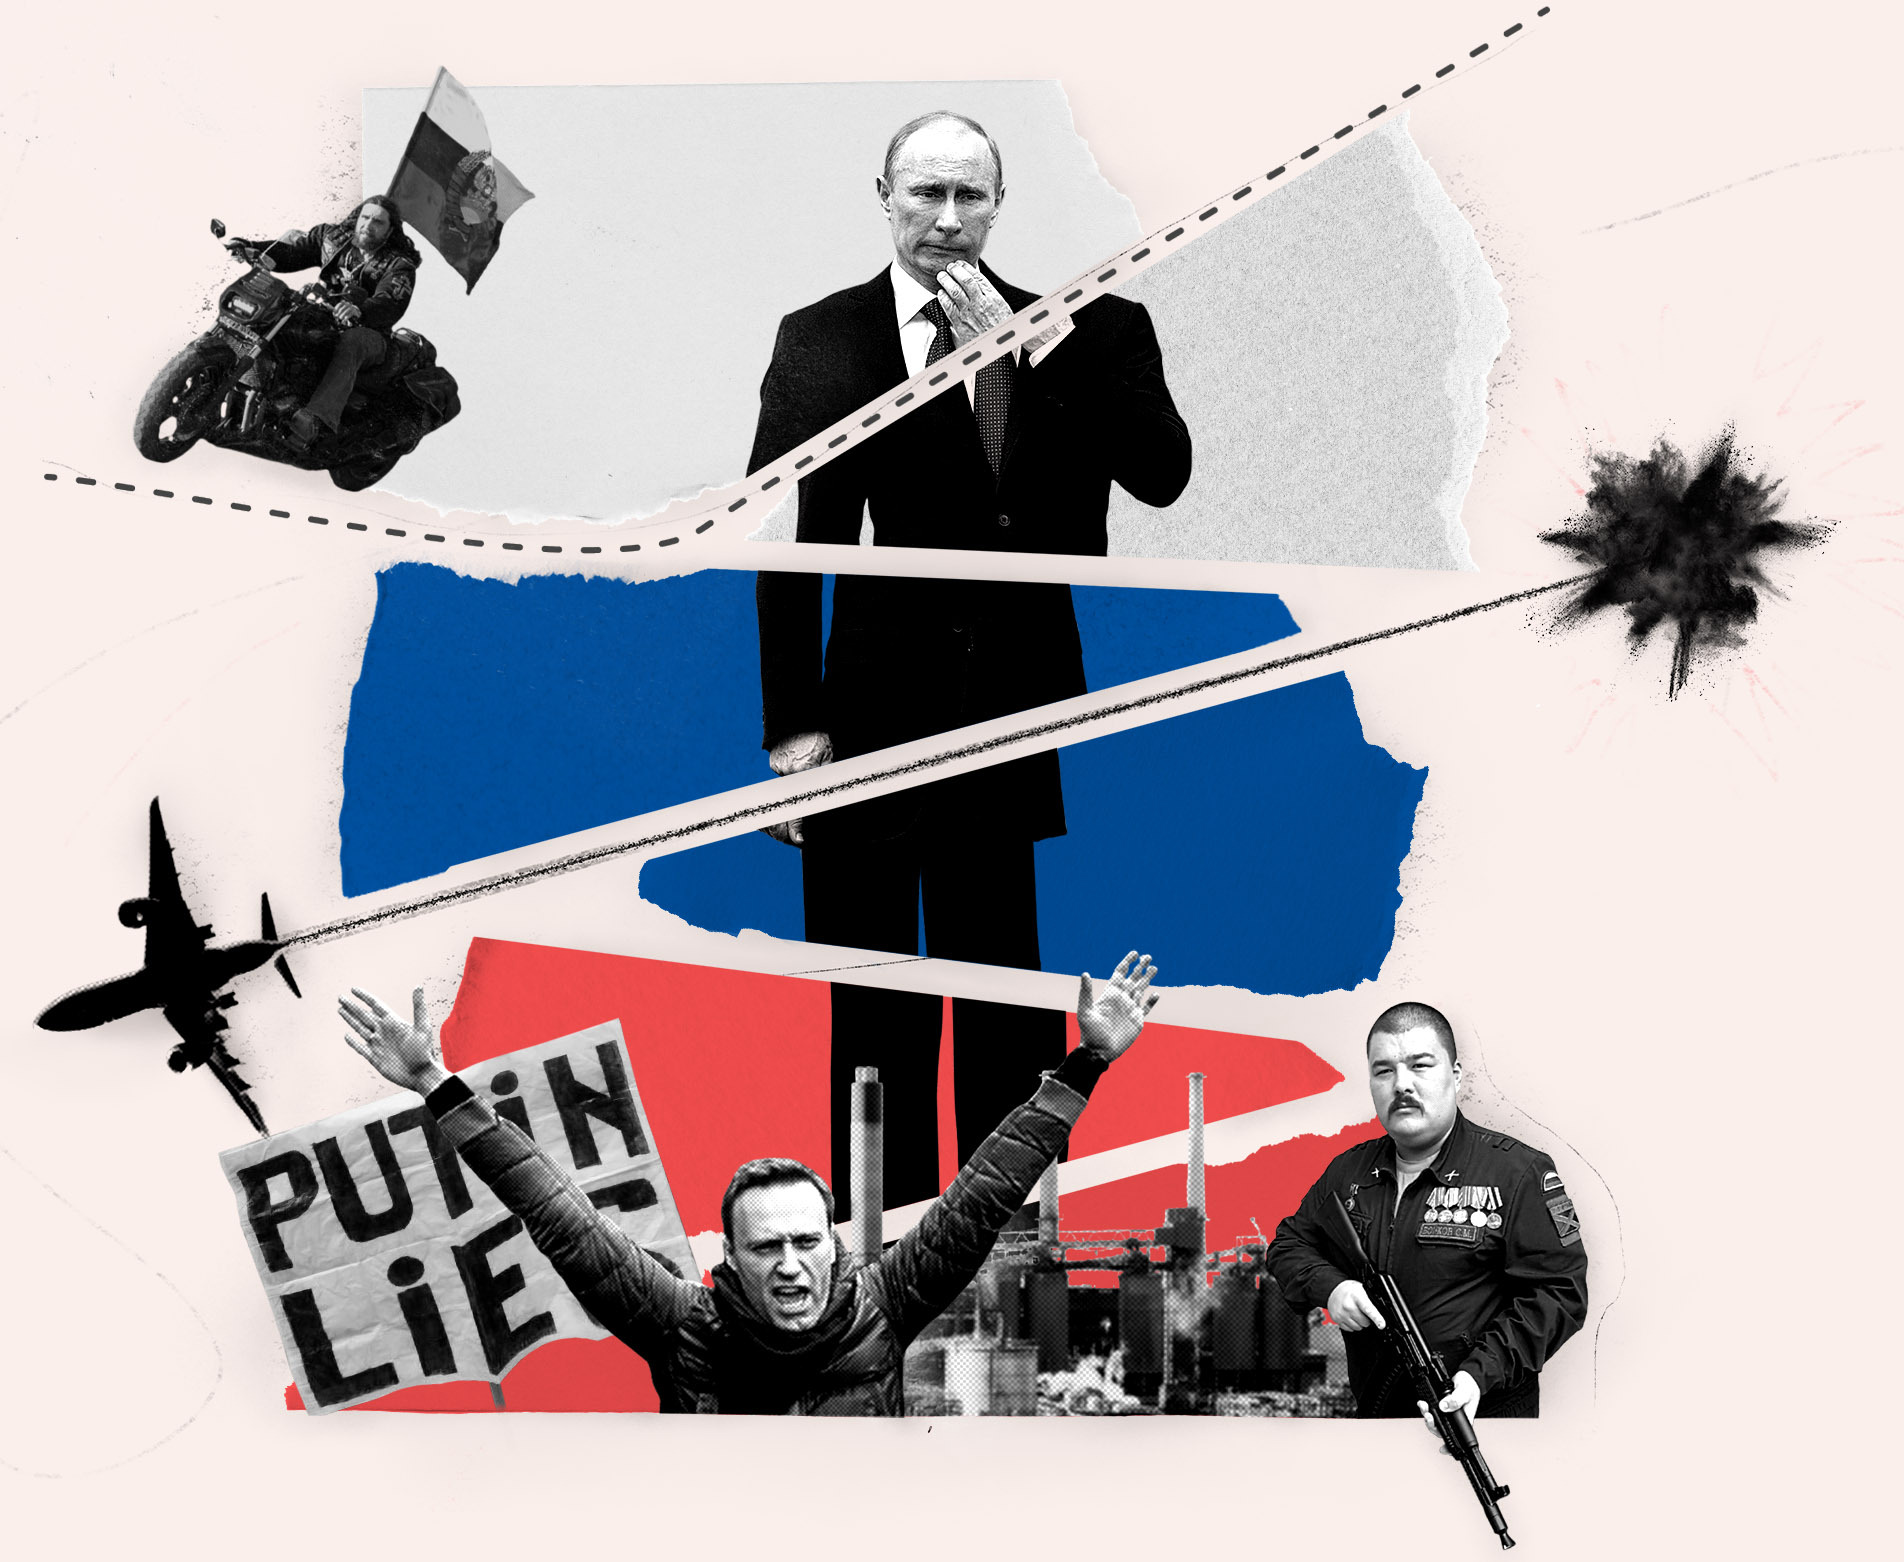 Putin collage